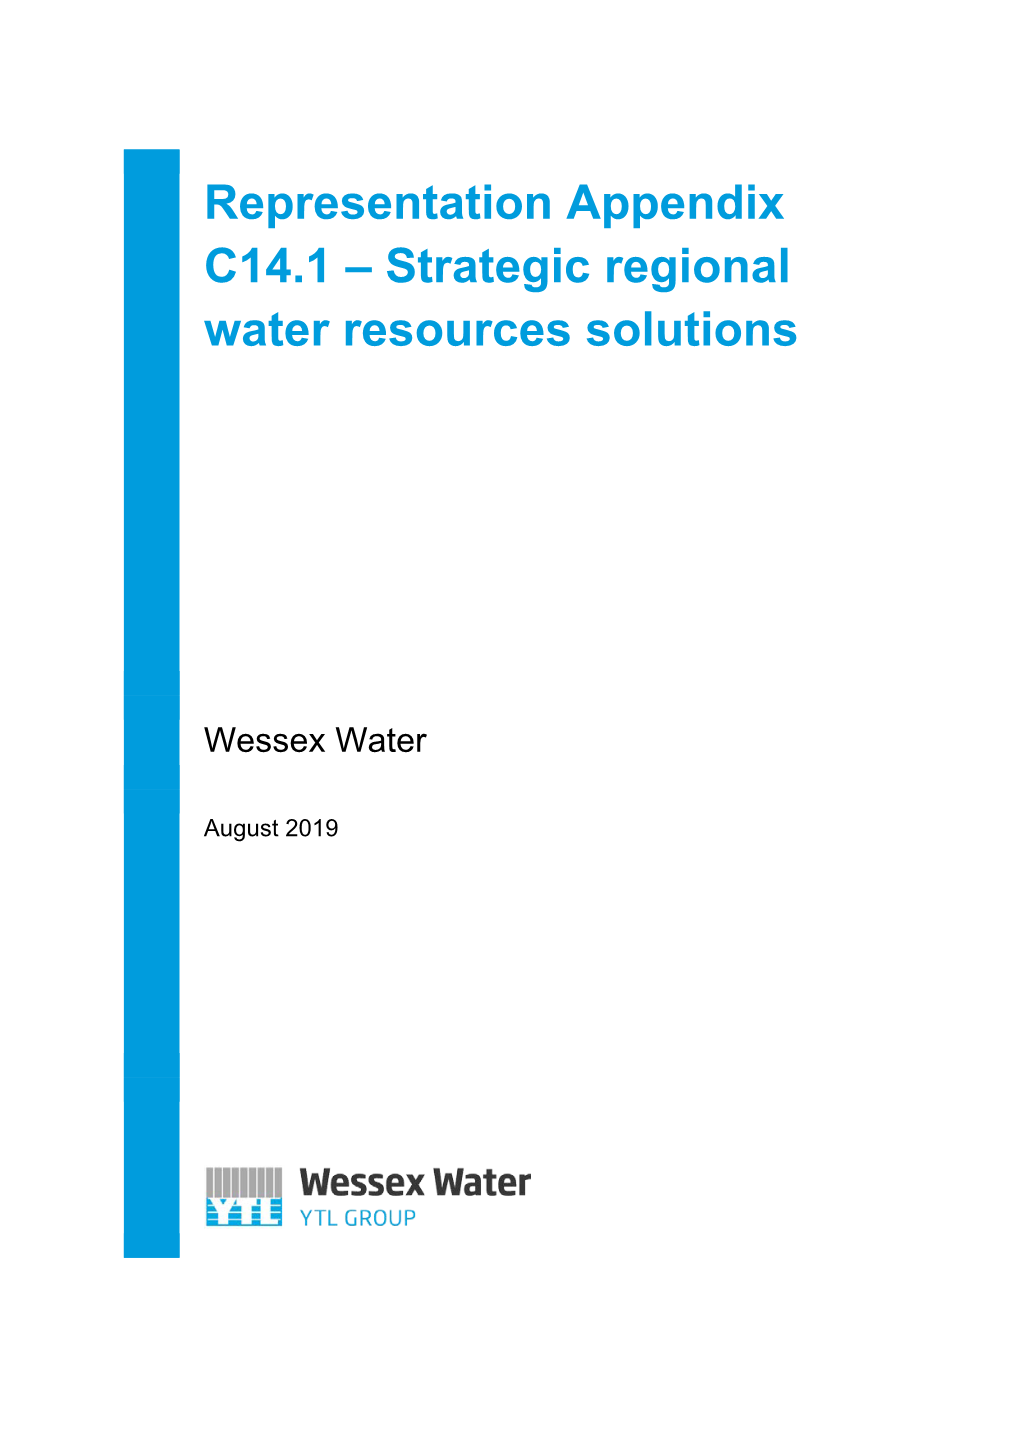 Representation Appendix C14.1 – Strategic Regional Water Resources Solutions